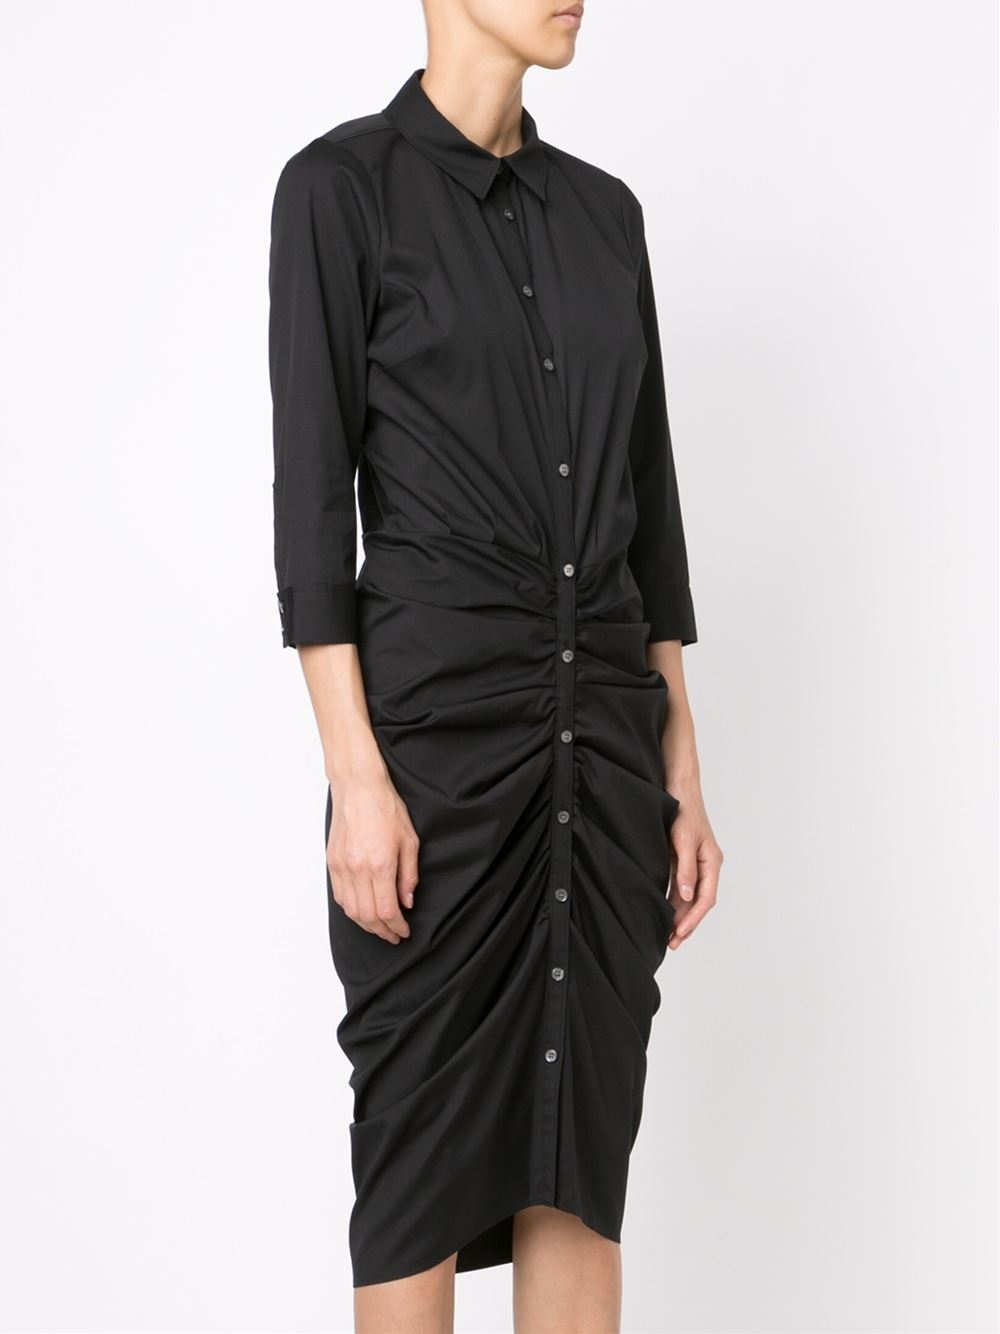 Lyst - Veronica Beard Ruched Shirt Dress in Black